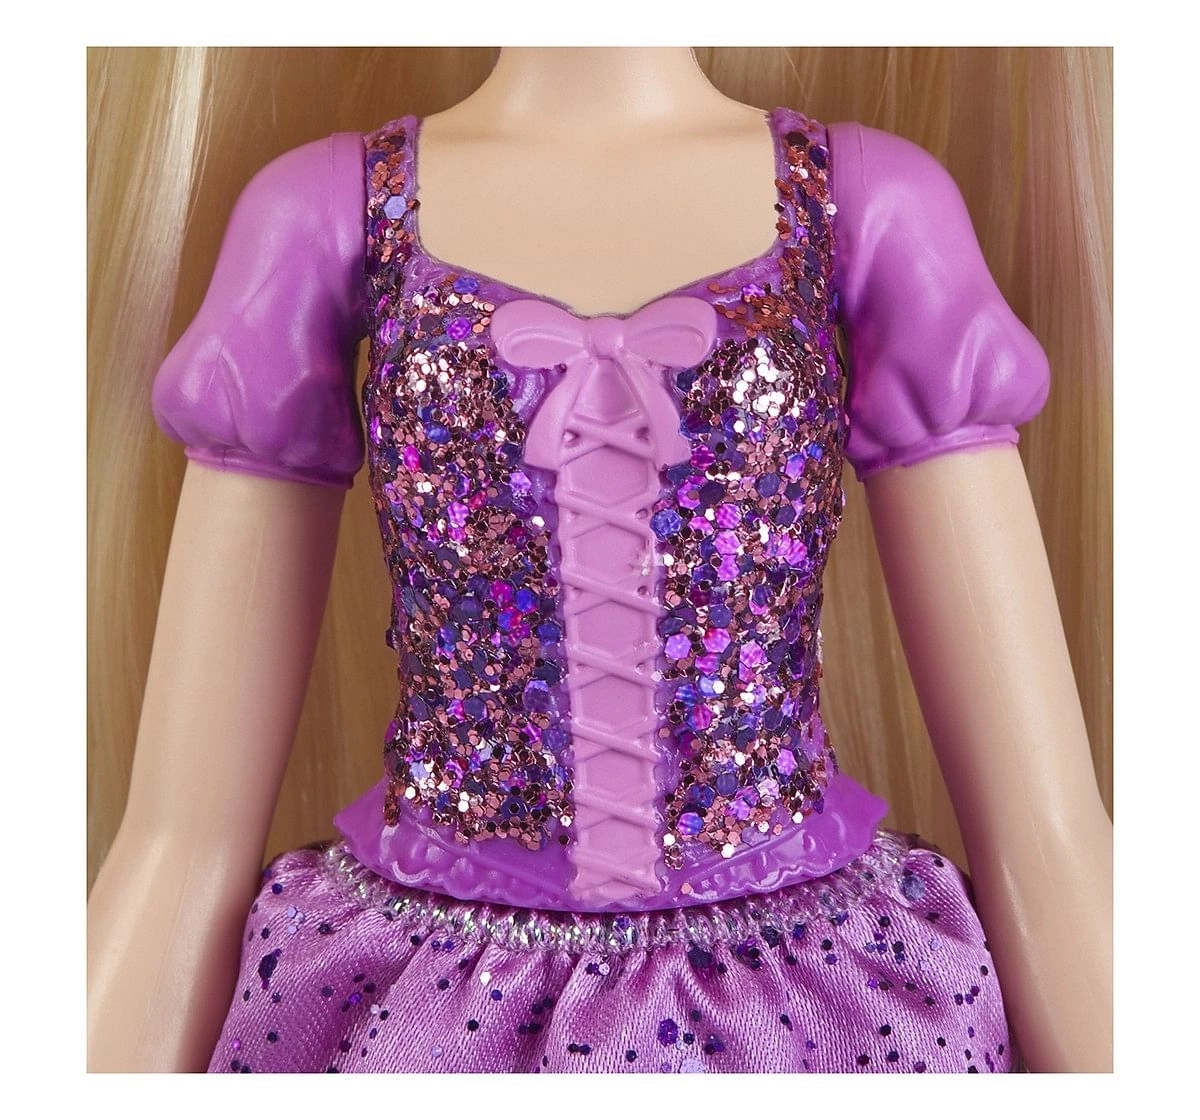 Disney Princess Royal Shimmer Rapunzel Dolls & Accessories for age 3Y+ 